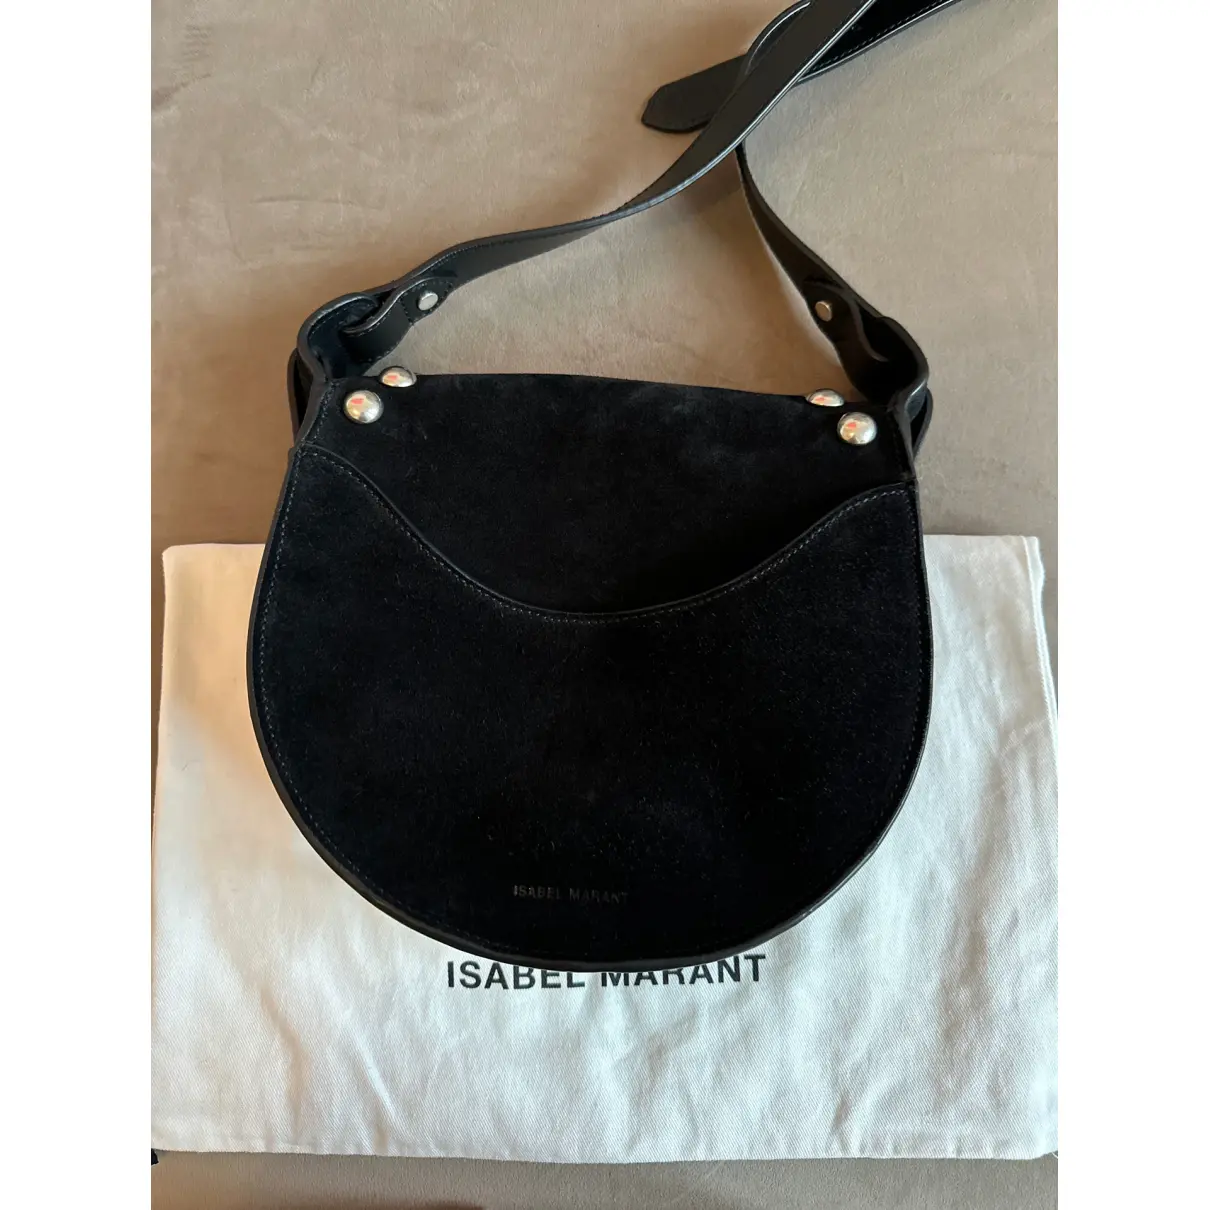 Buy Isabel Marant Radja leather handbag online